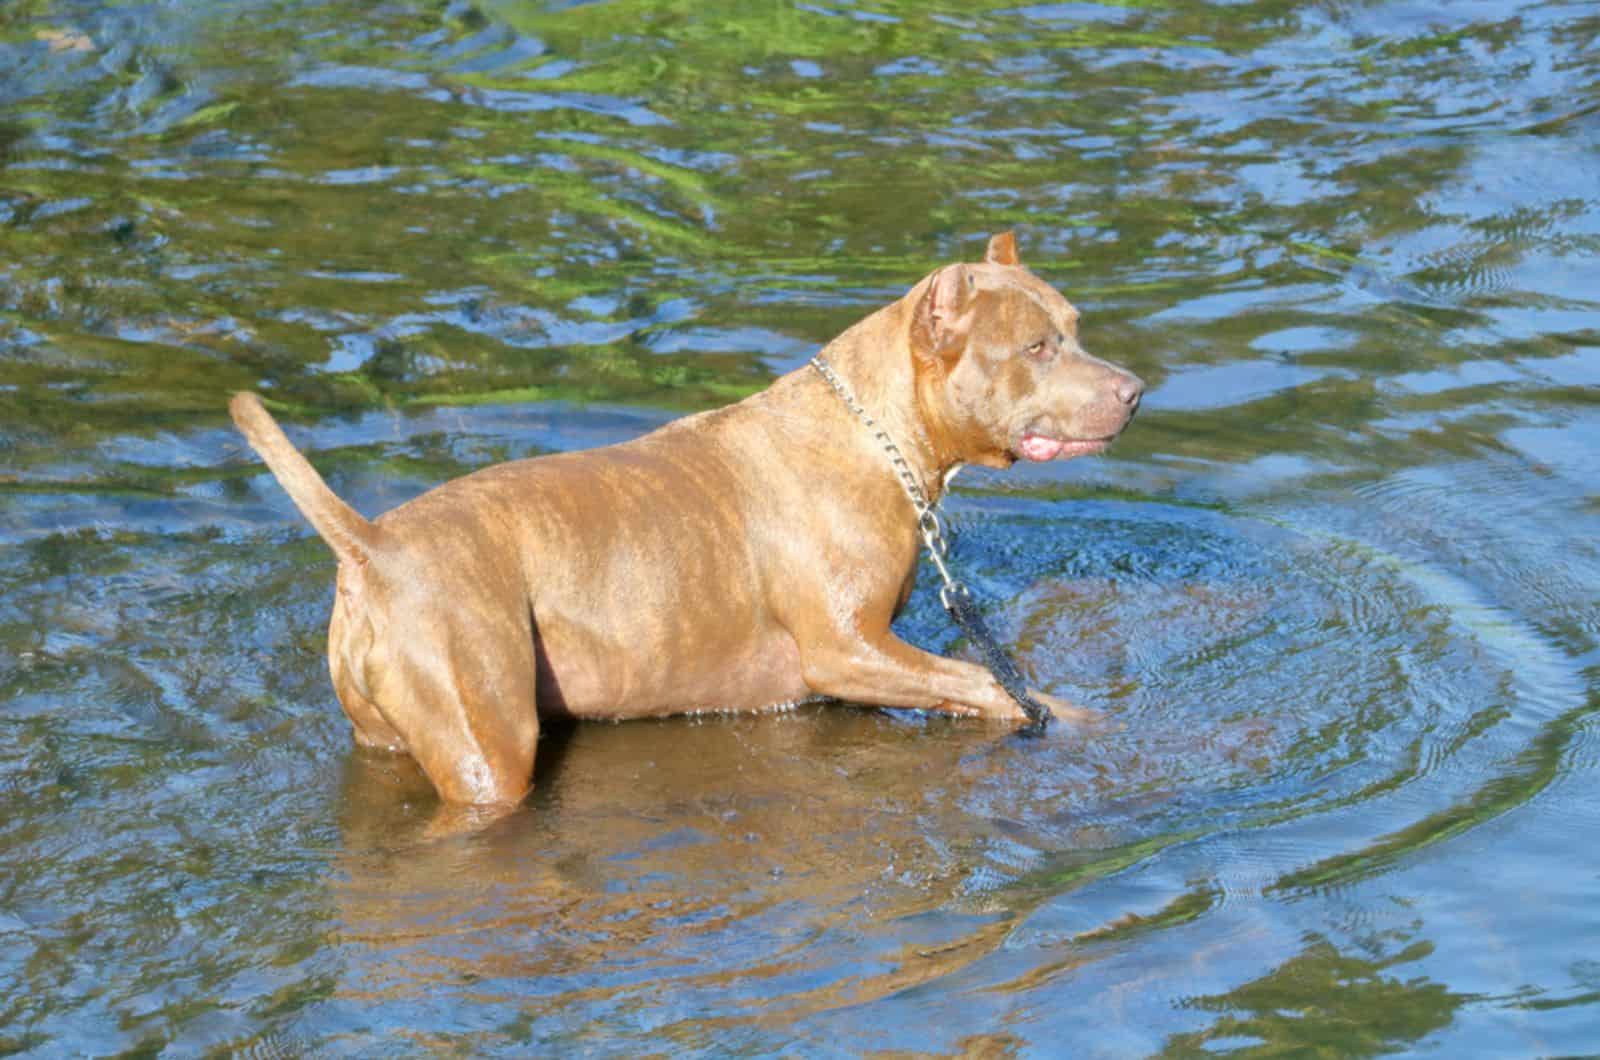 catahoula bulldog playing in the water